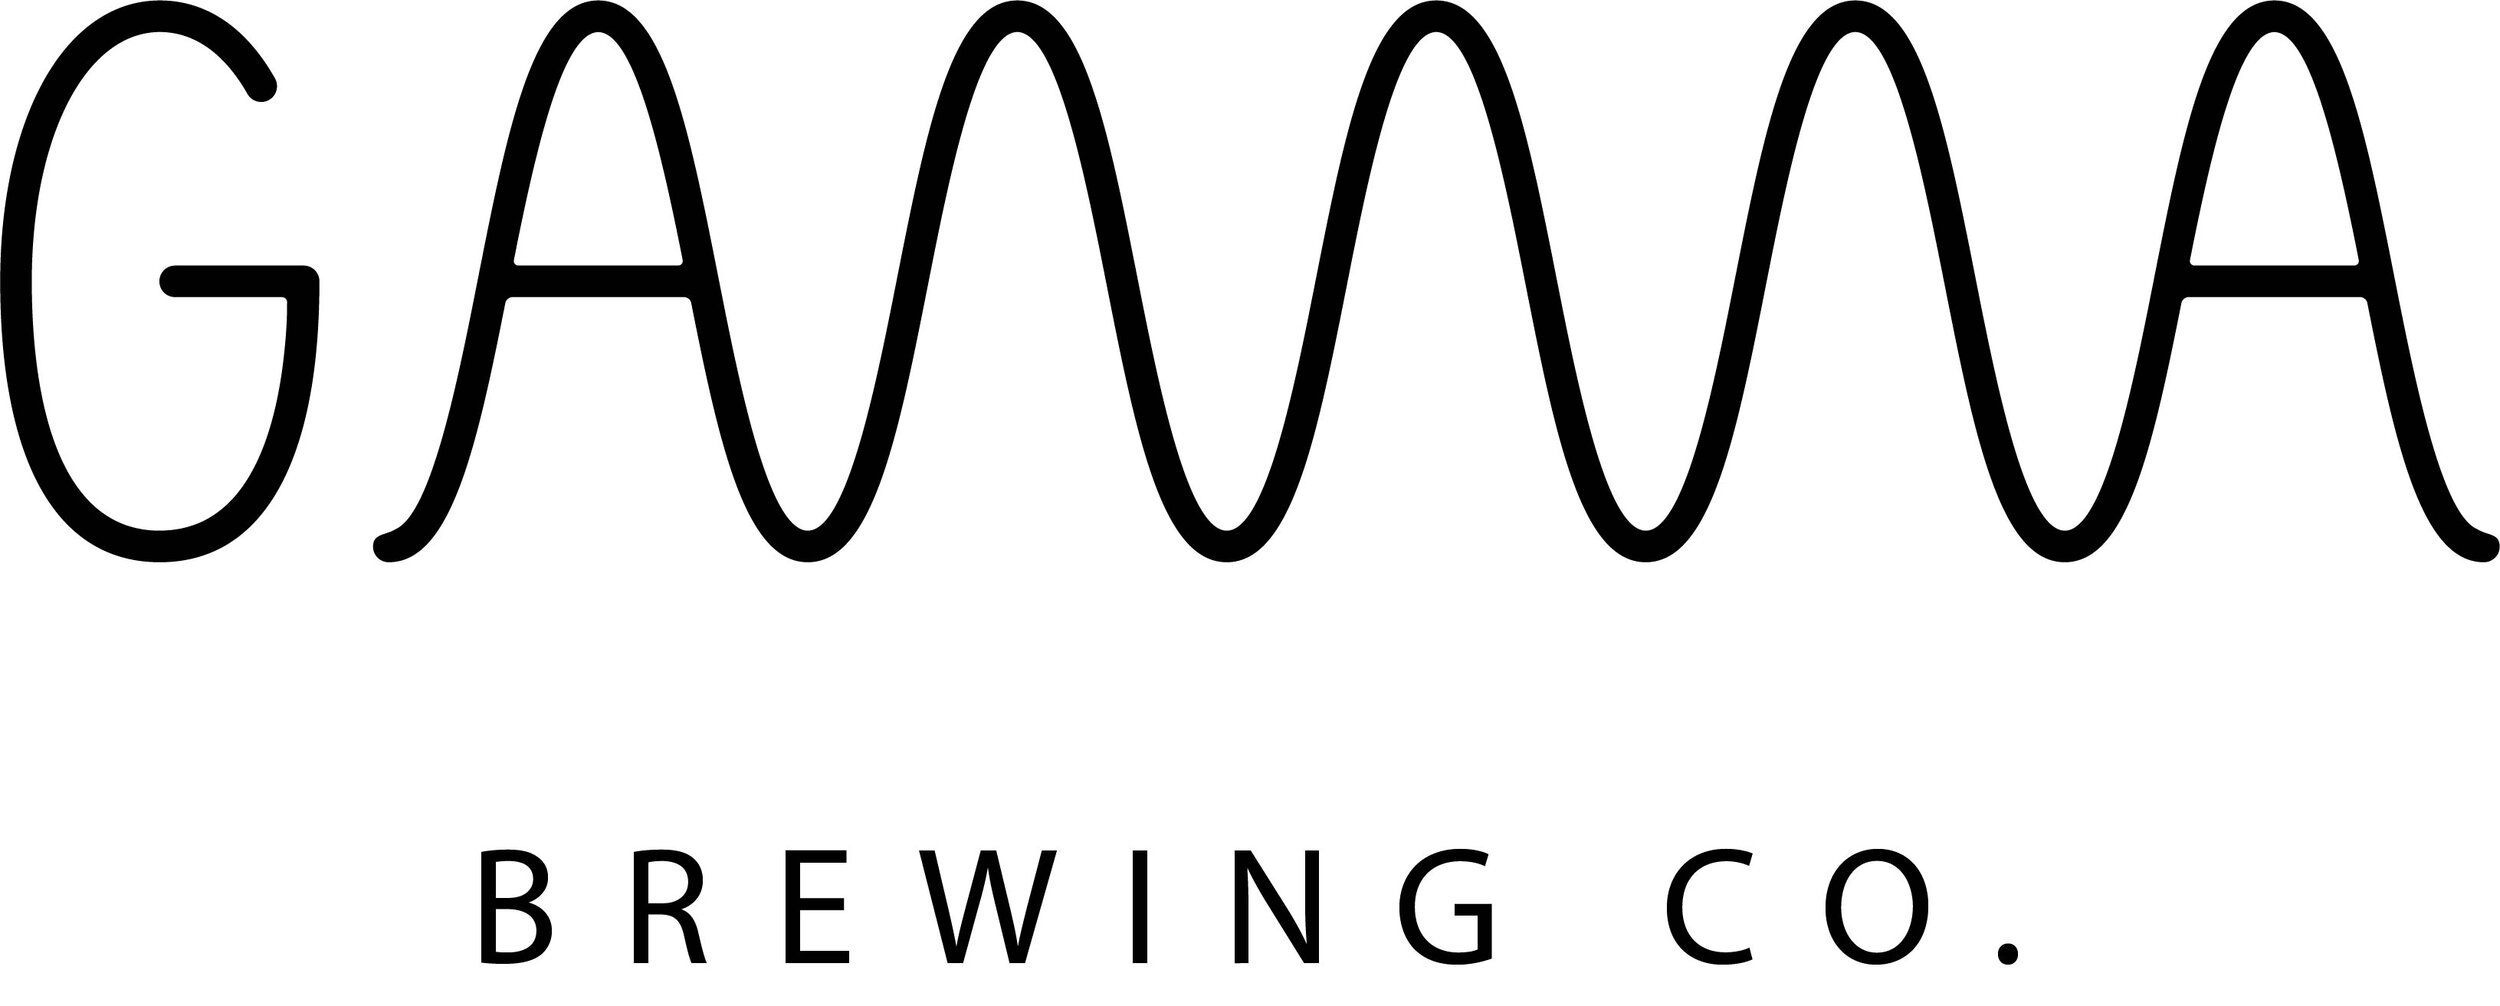 Gamma_brewing_logo.jpg